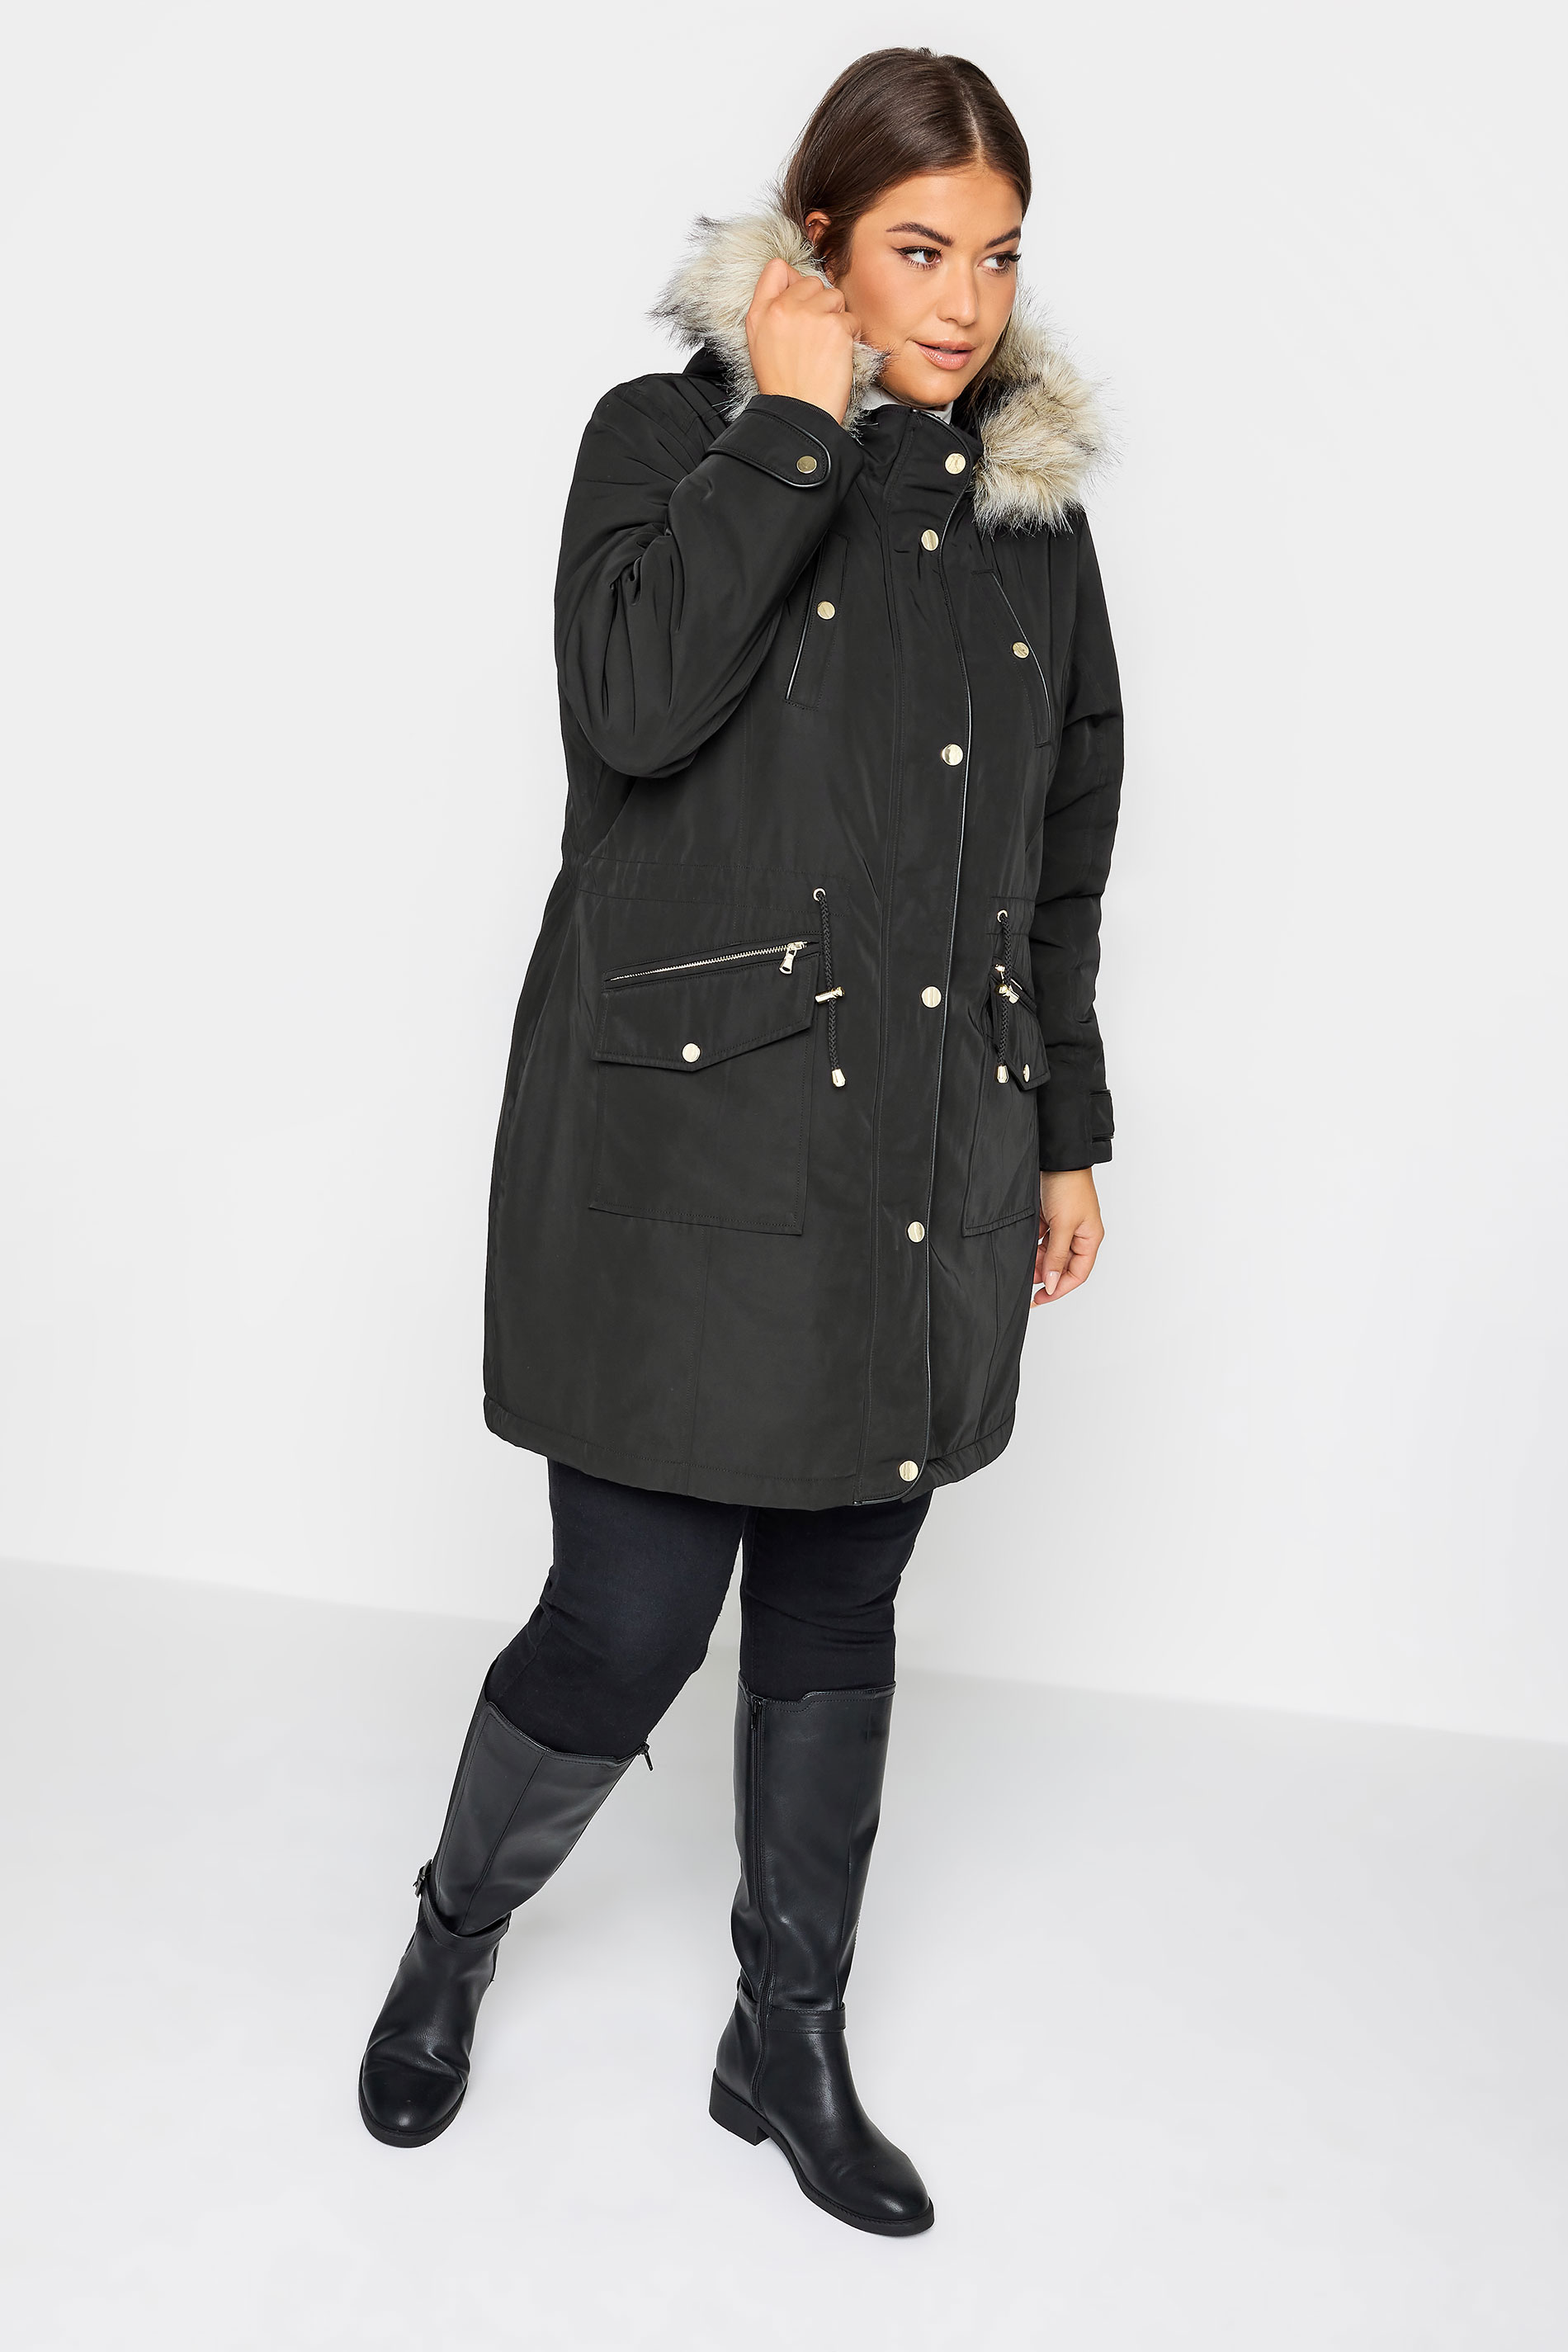 YOURS Plus Size Black Faux Fur Trim Hooded Parka Coat | Yours Clothing 3